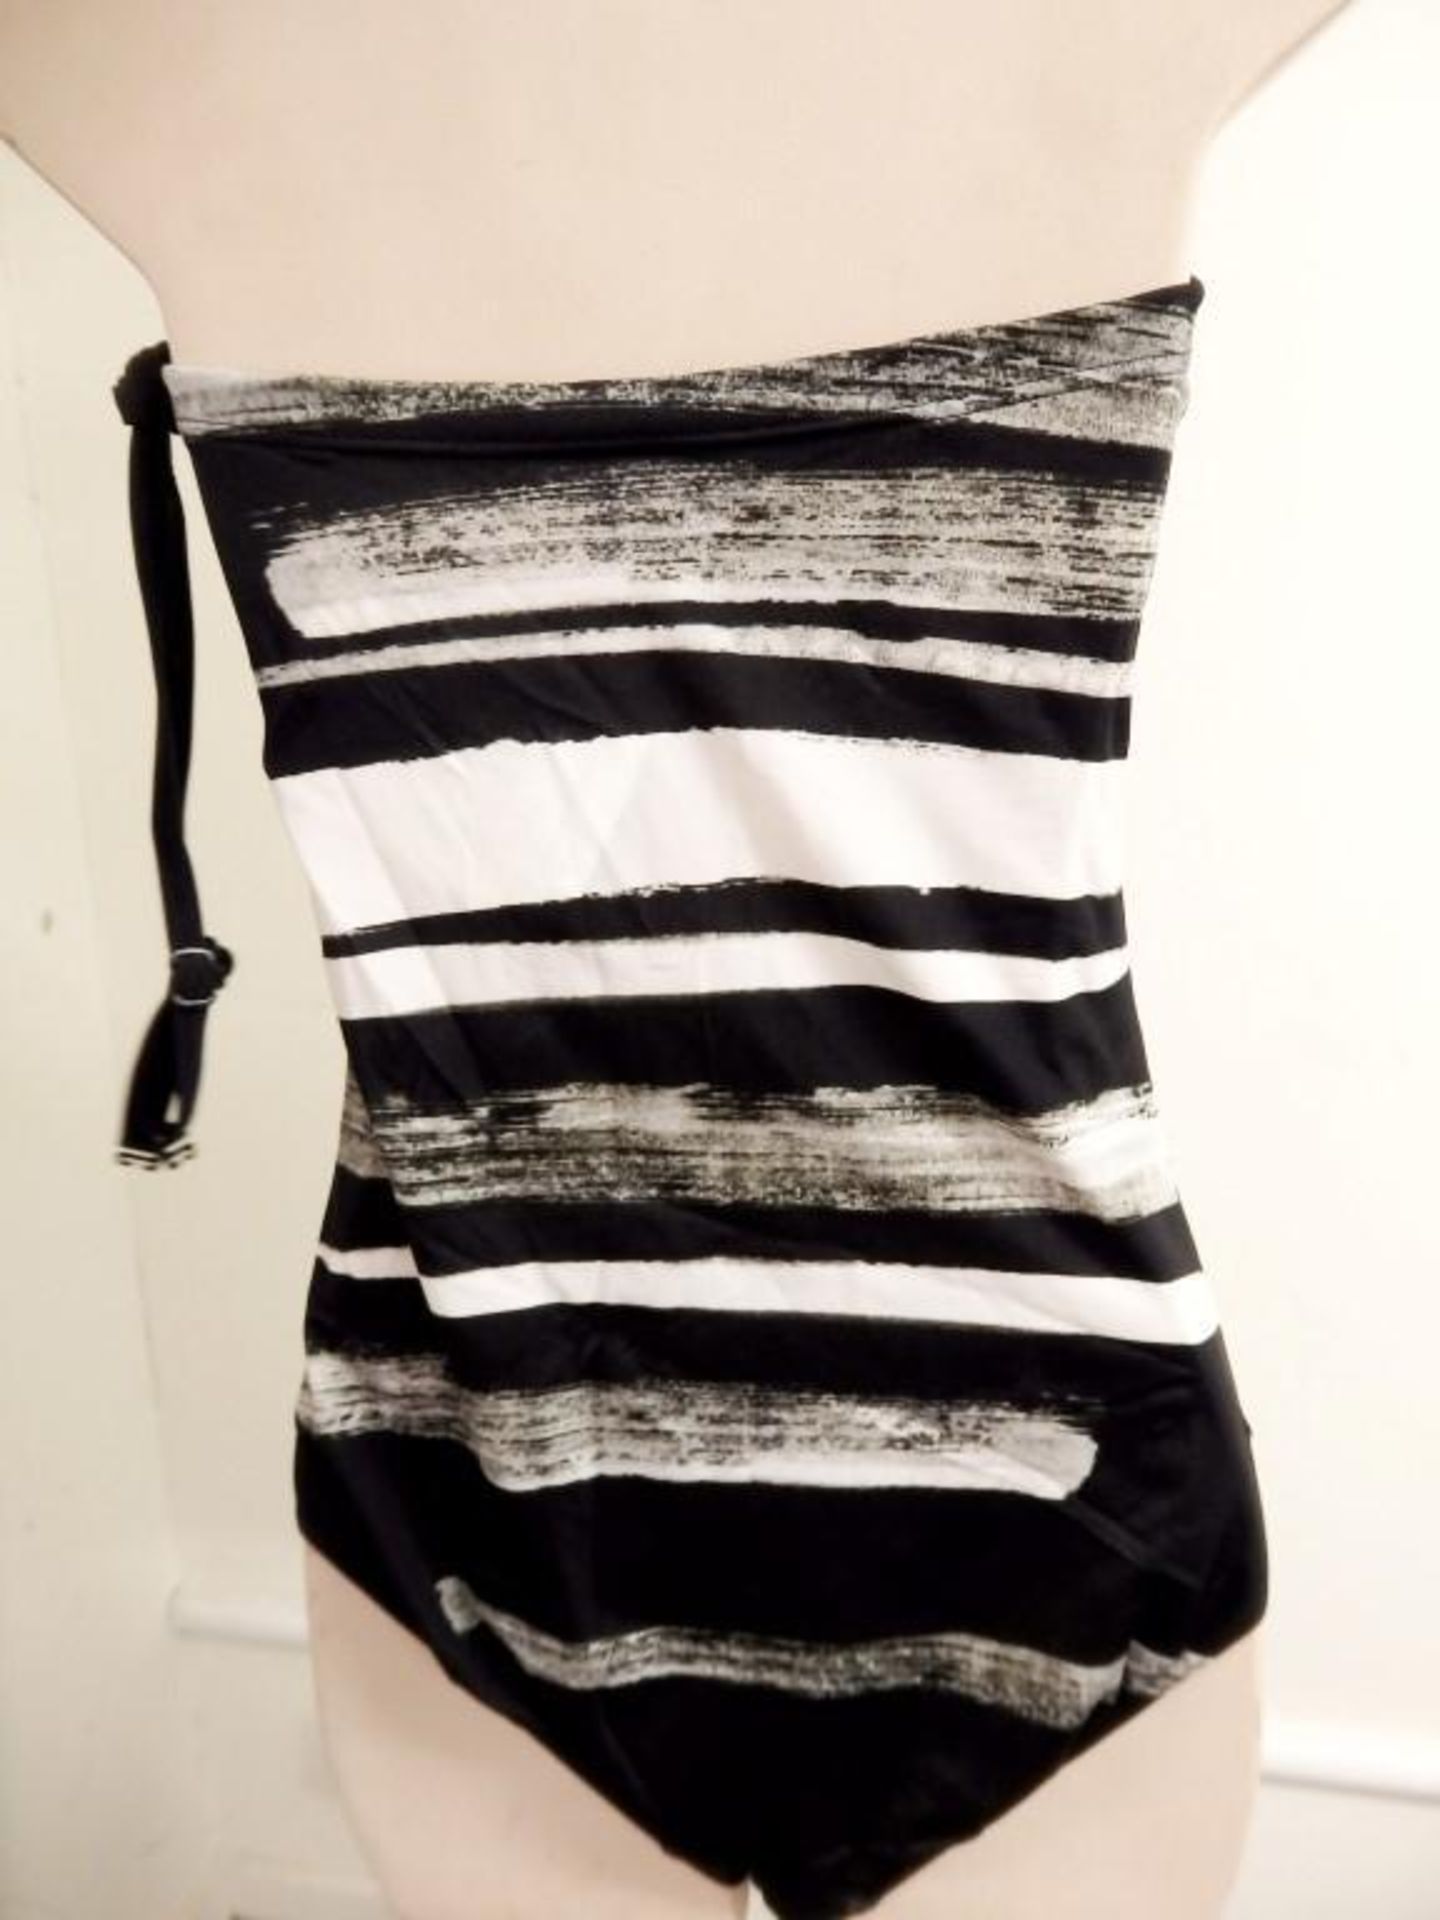 1 x Rasurel - Black/Ecru and vibrant patternedbustier -Cuba Swimsuit - R20738 - Size 2C - UK 32 - Image 2 of 7